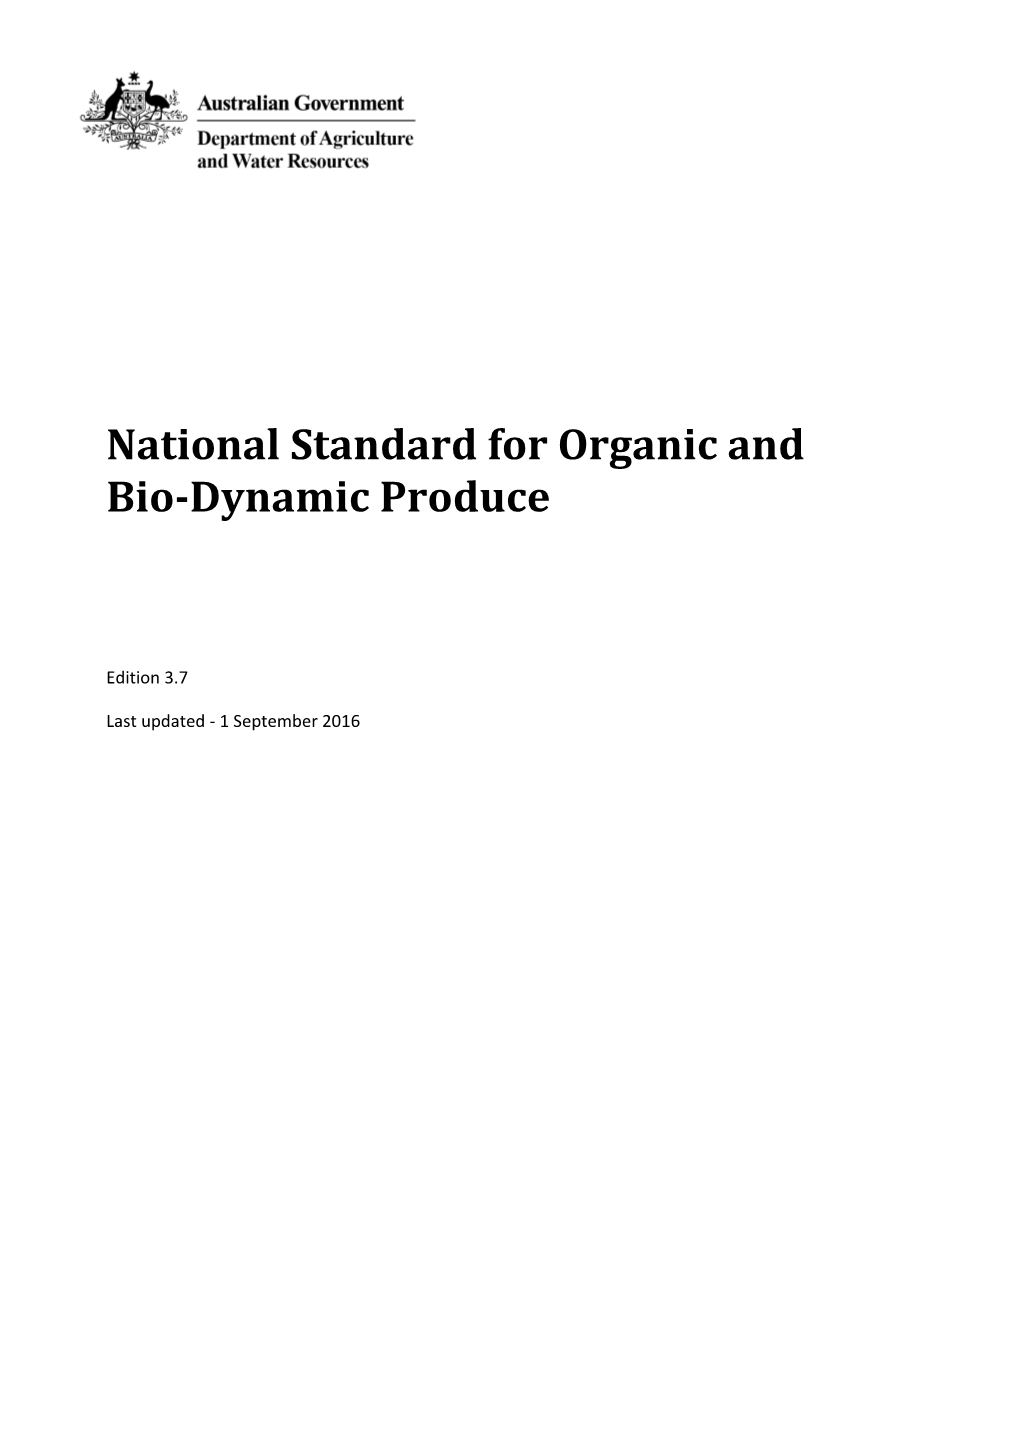 Draft National Standard 2002